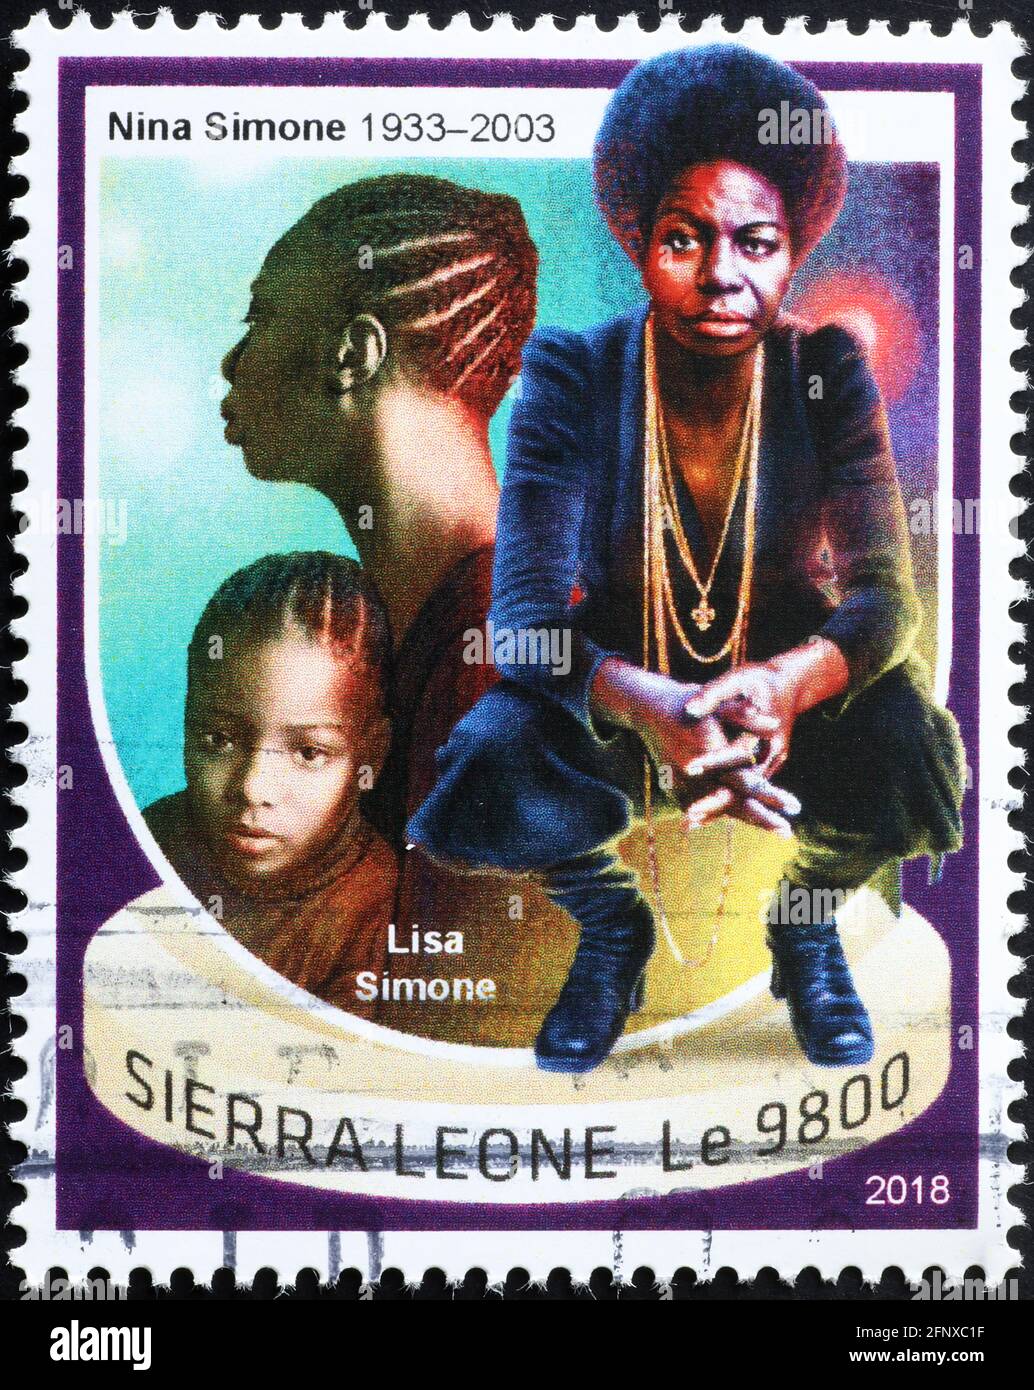 Nina Simone portrait on postage stamp Stock Photo